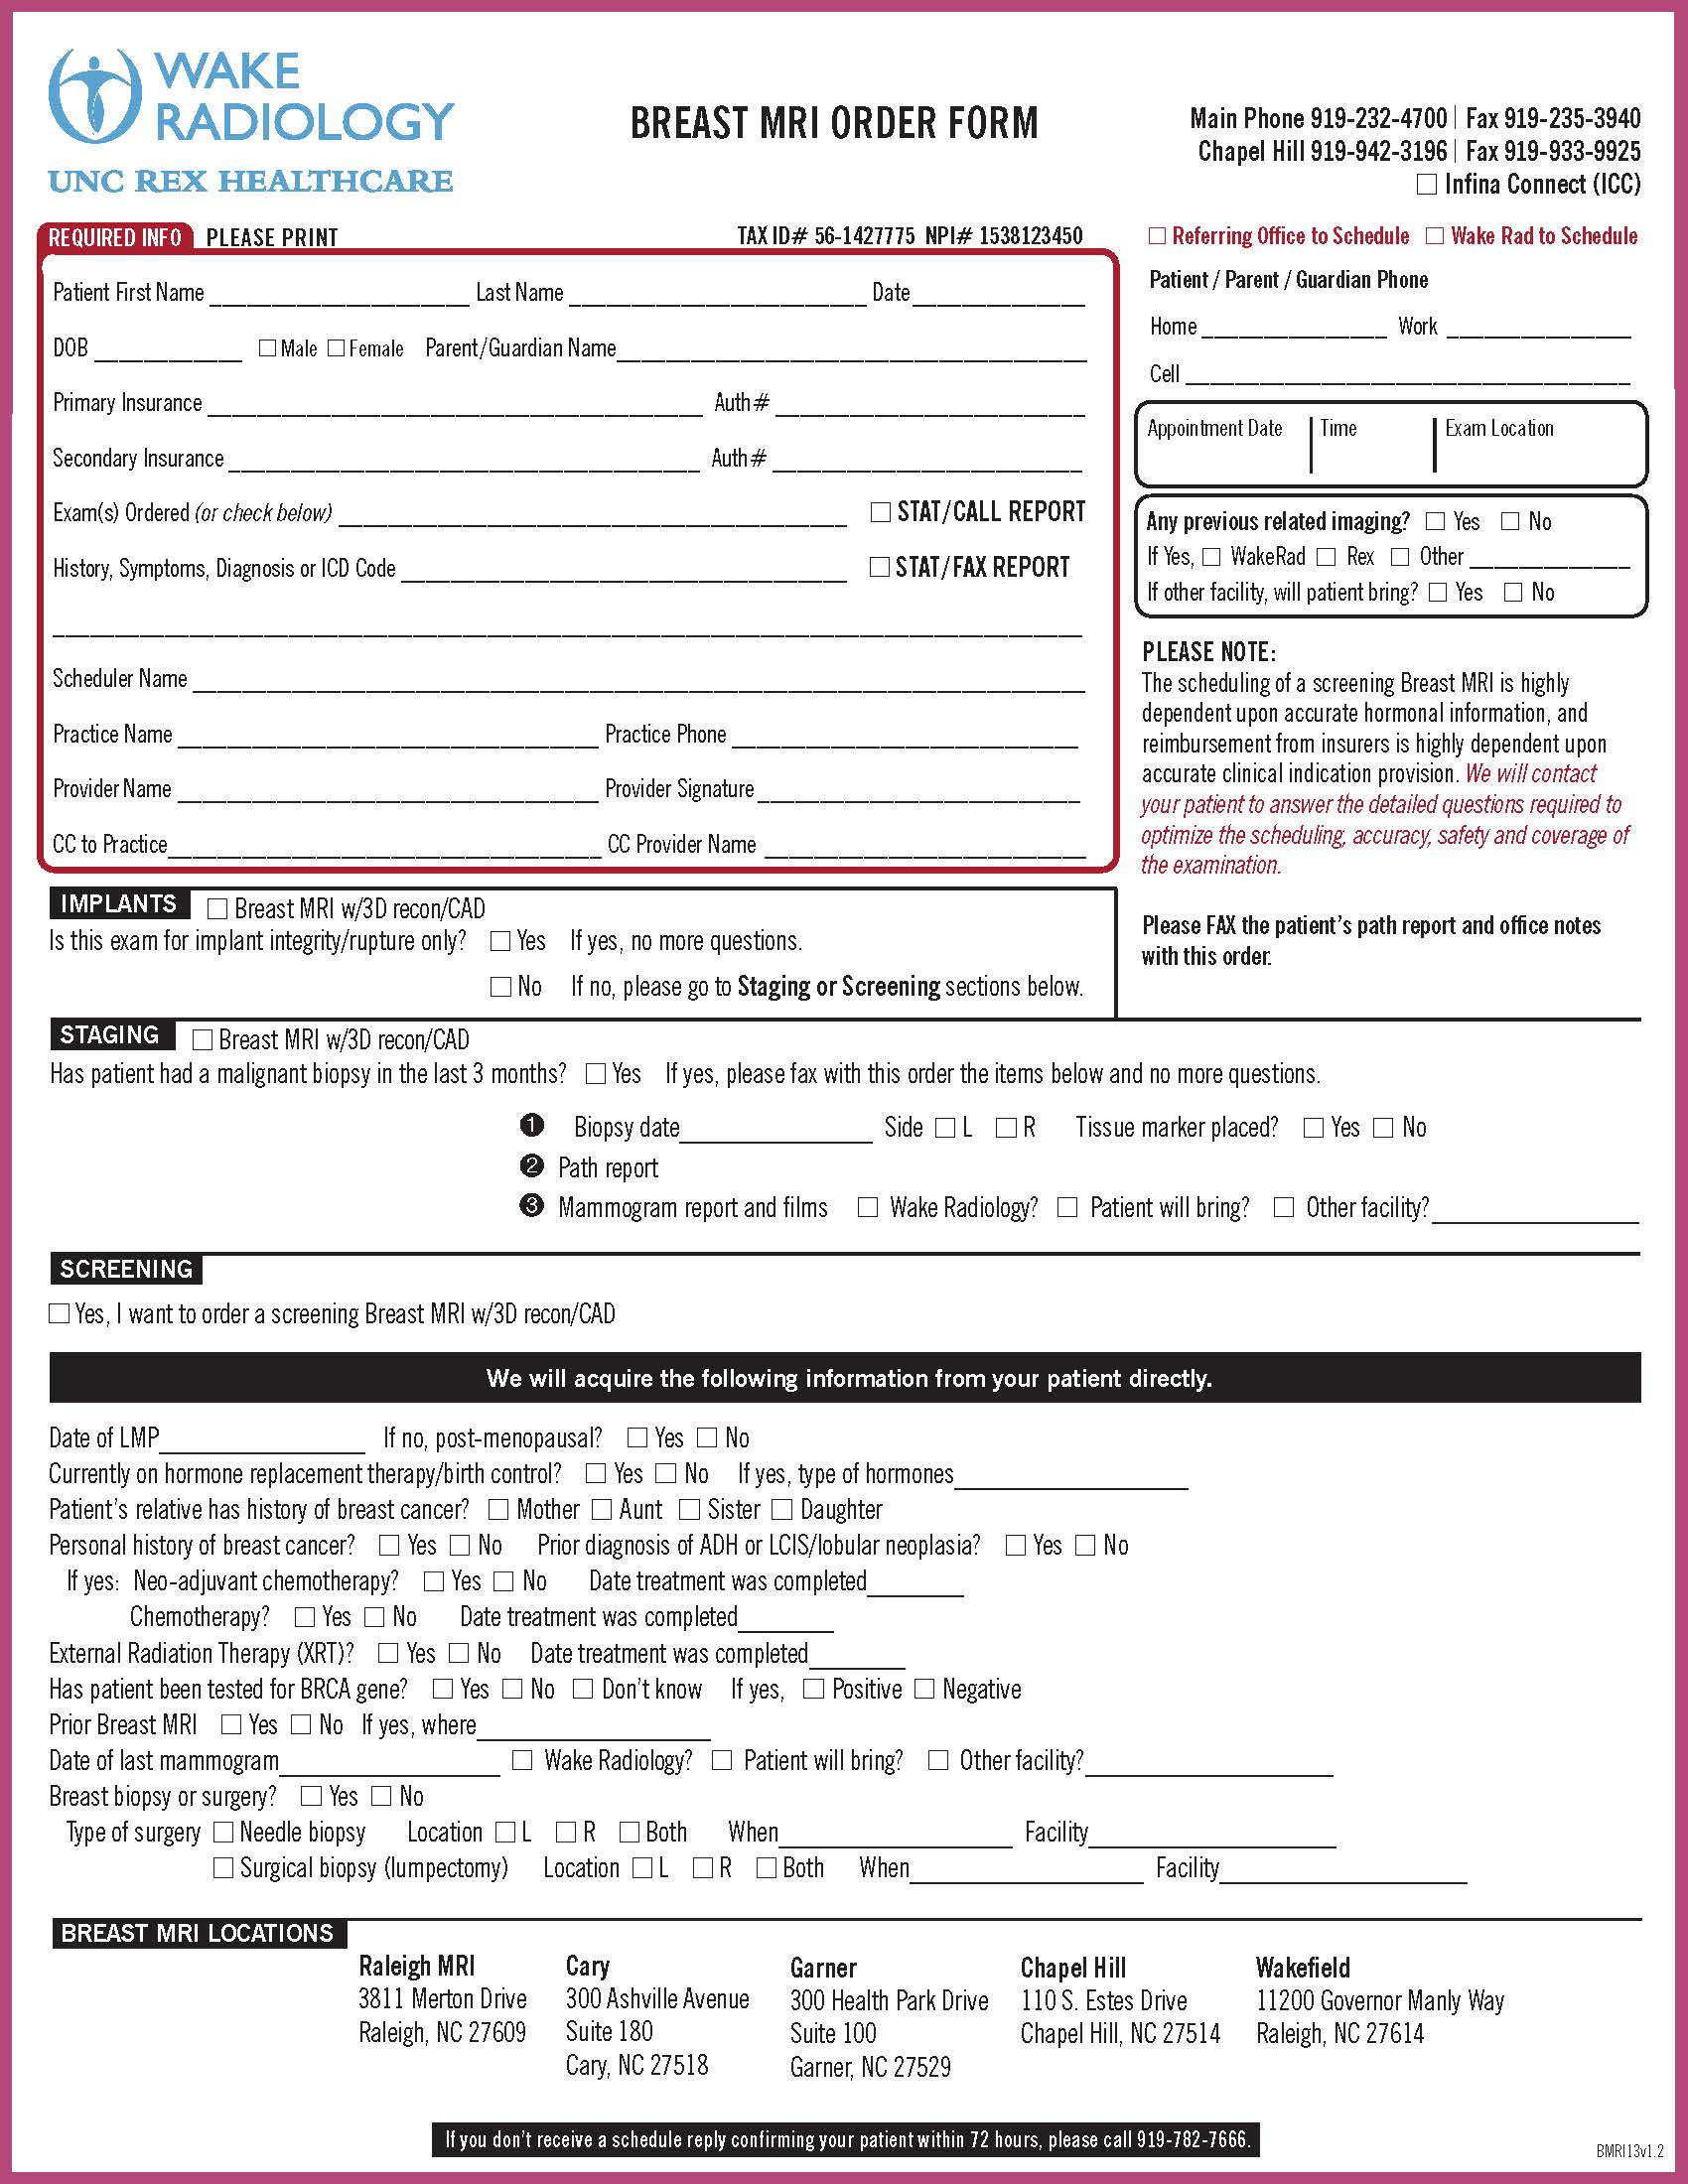 Print & Request Order Forms - Provider Portal